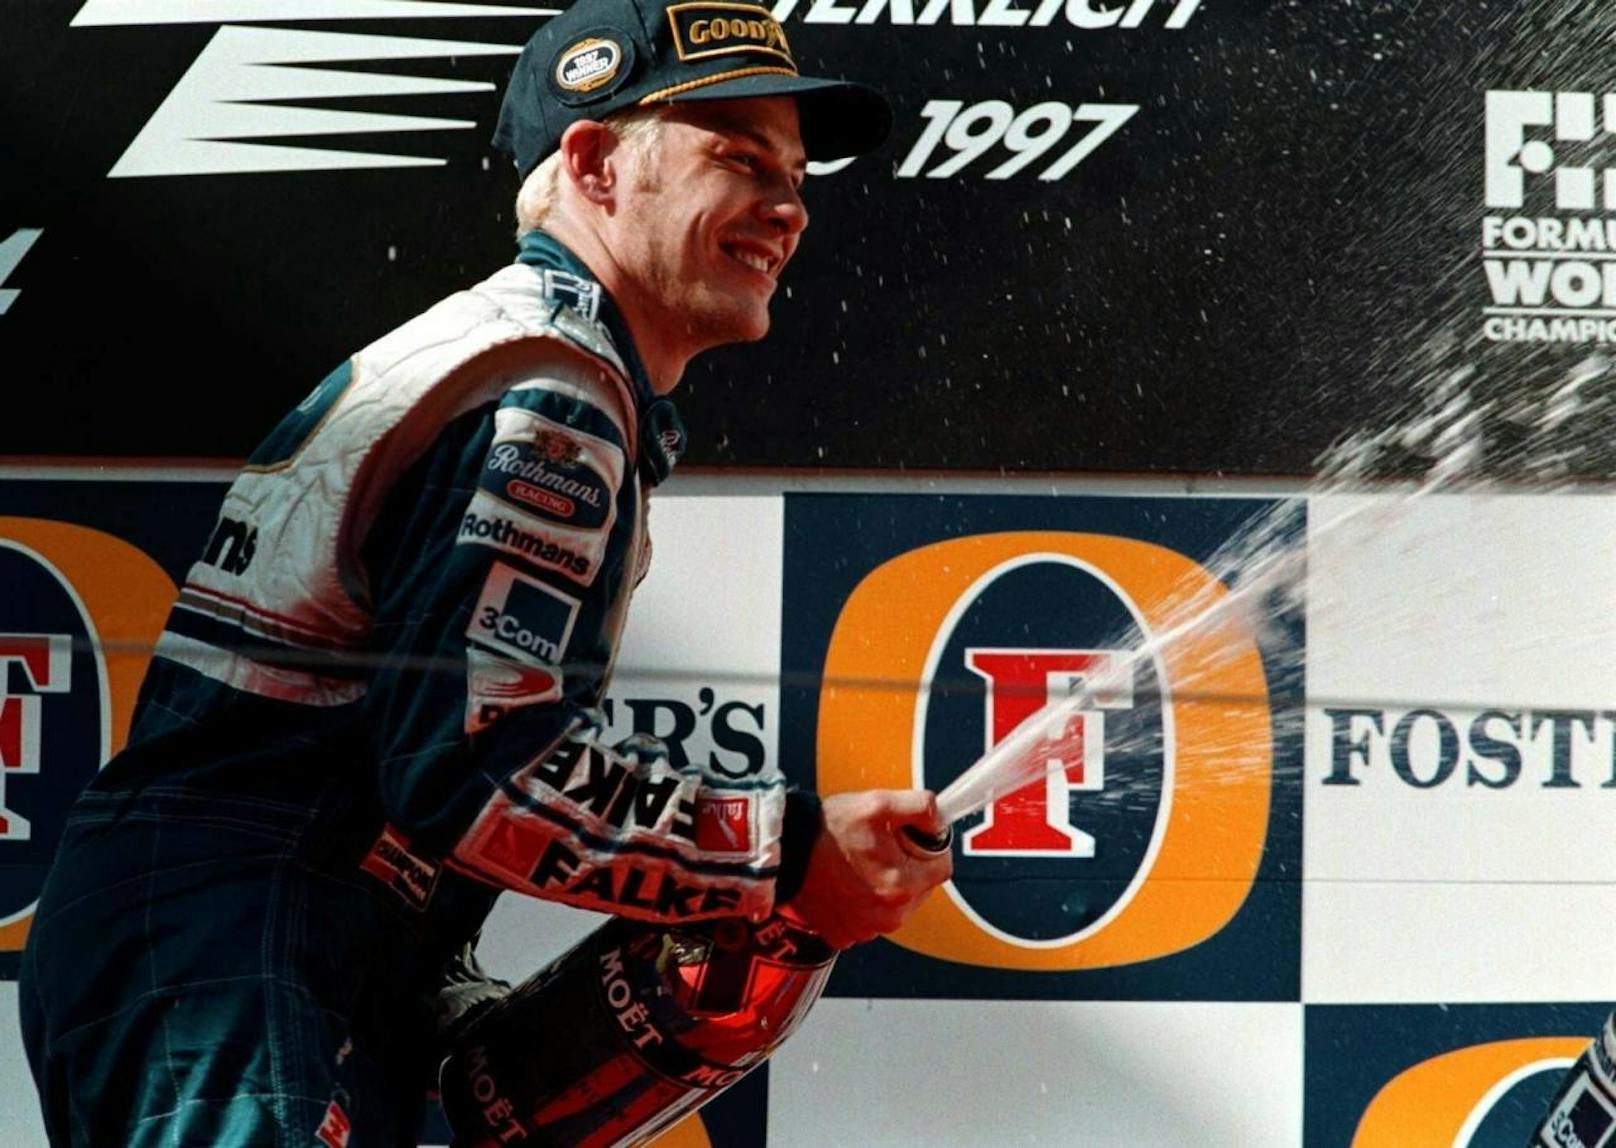 Das Comeback auf dem umgebauten A1 Ring gewann 1997 Jacques Villeneuve (CAN) auf Williams.